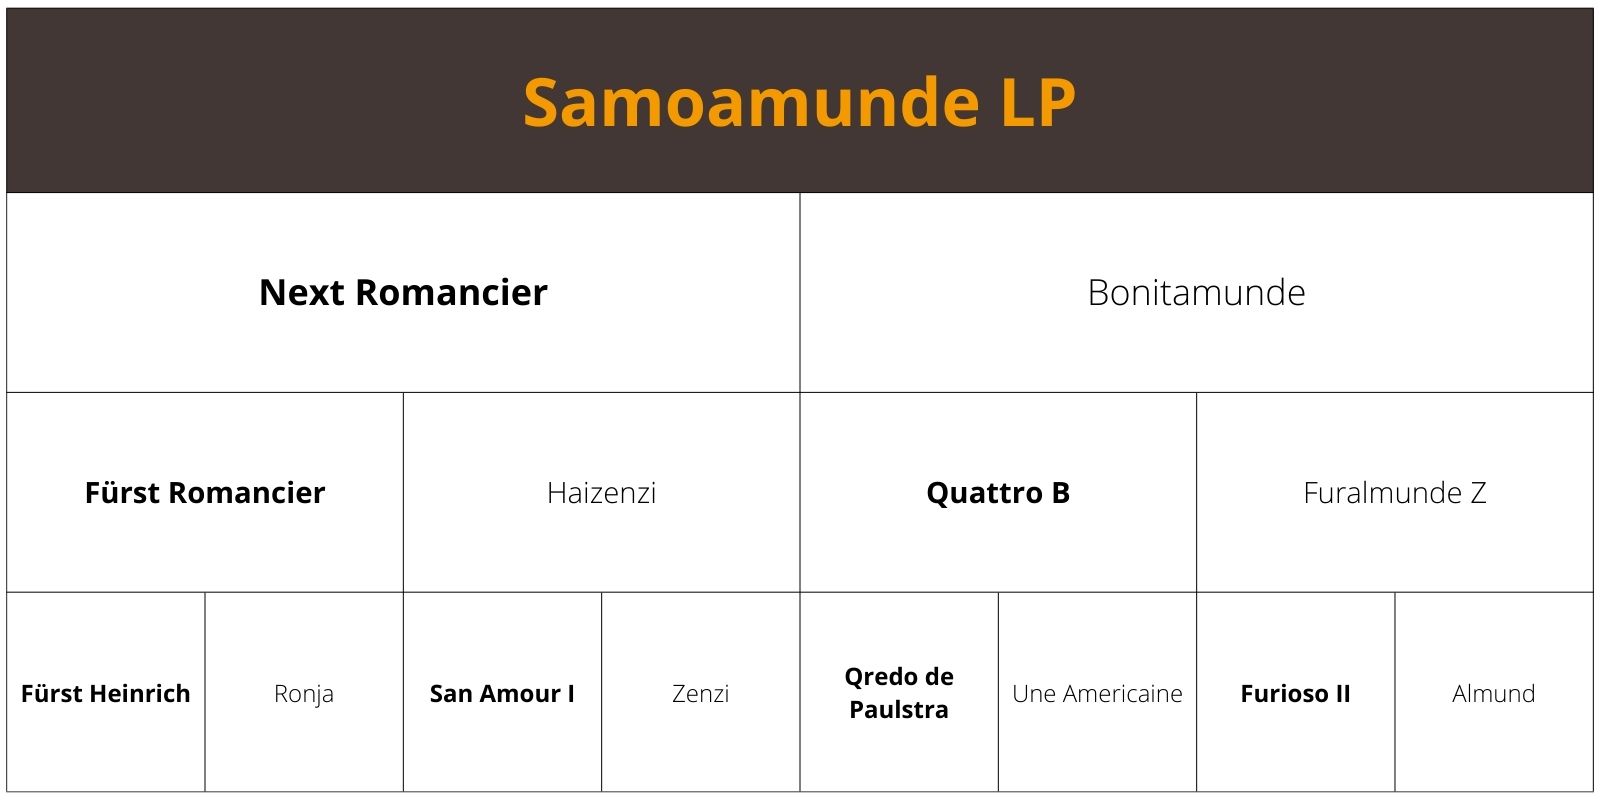 Samoamunde LP